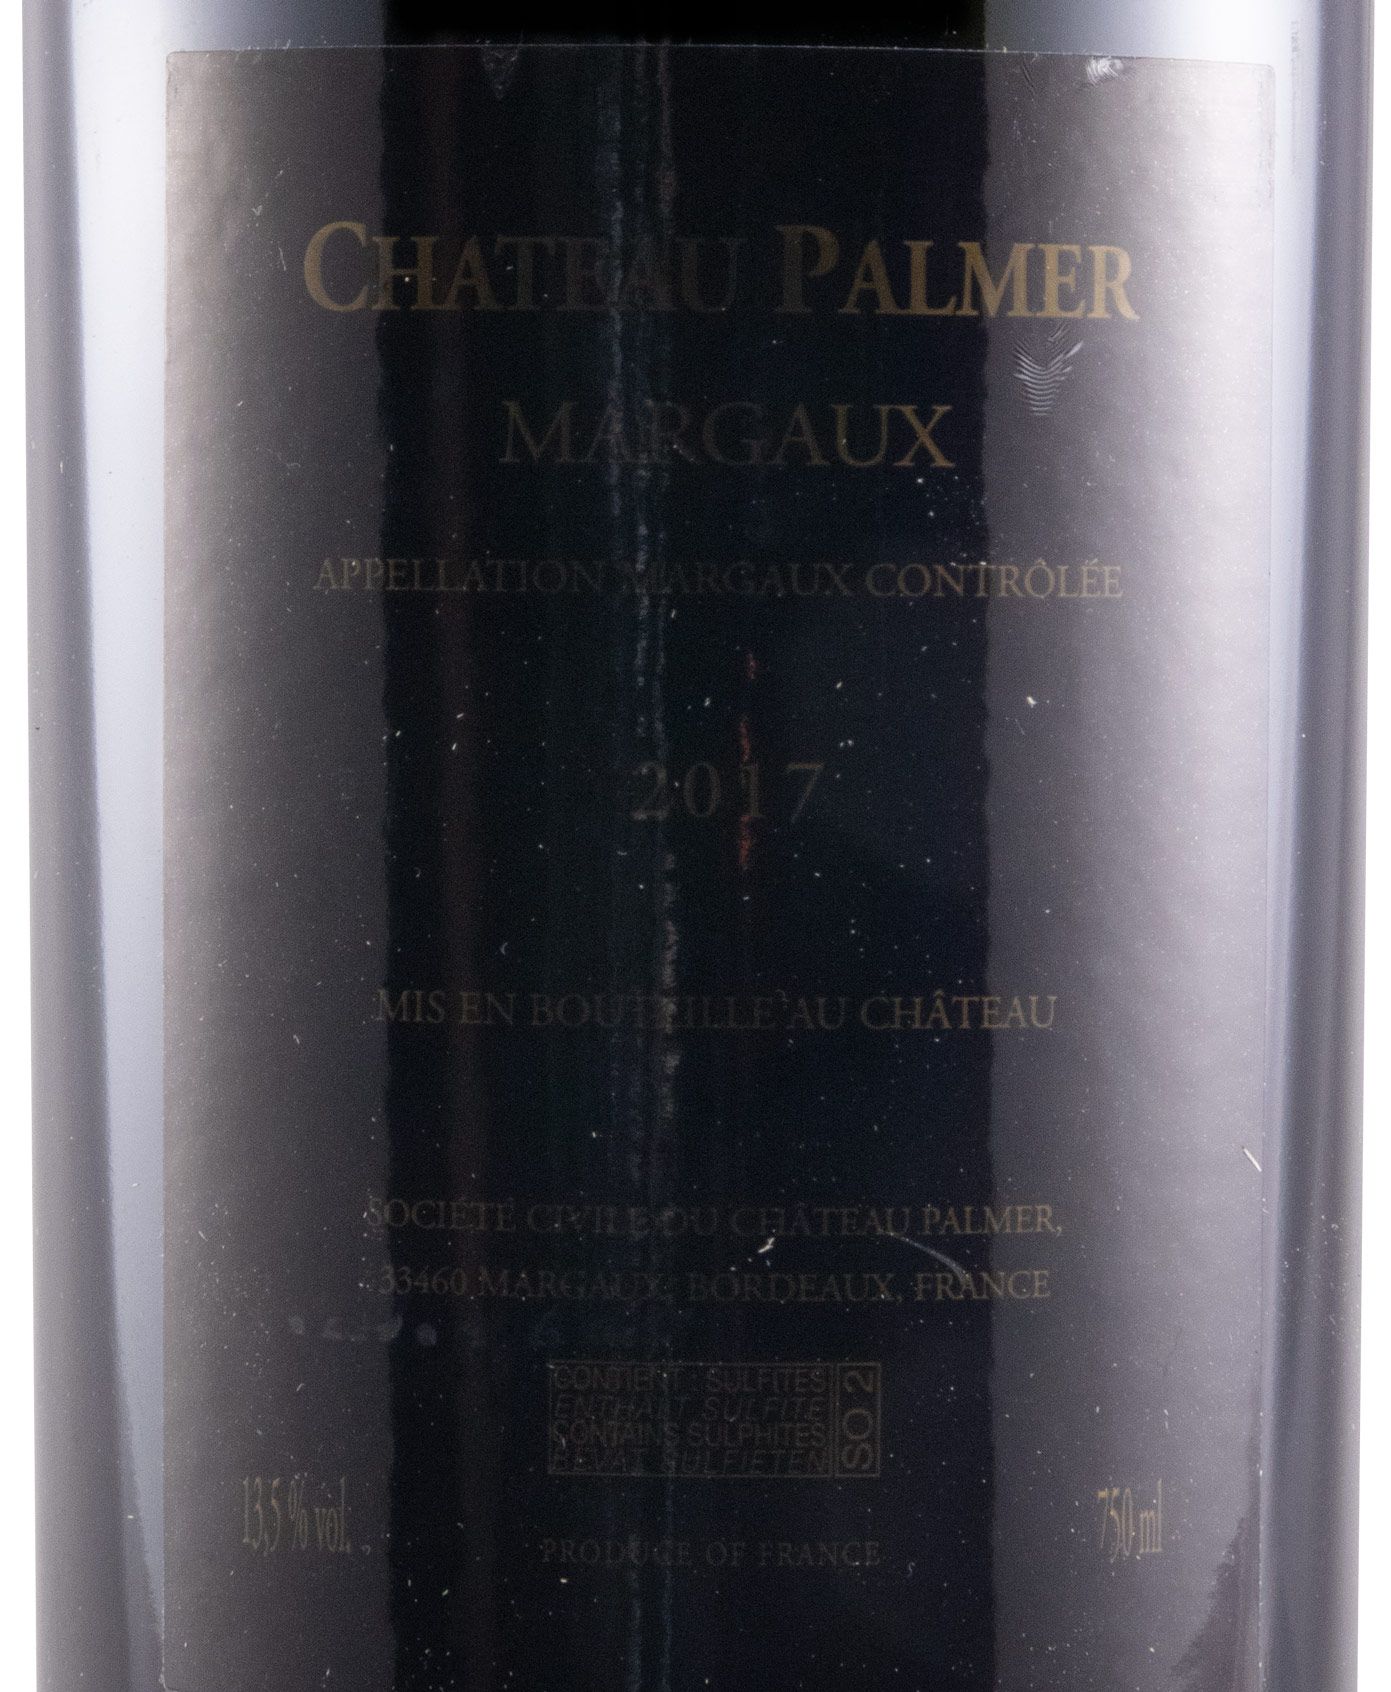 2017 Château Palmer Margaux tinto